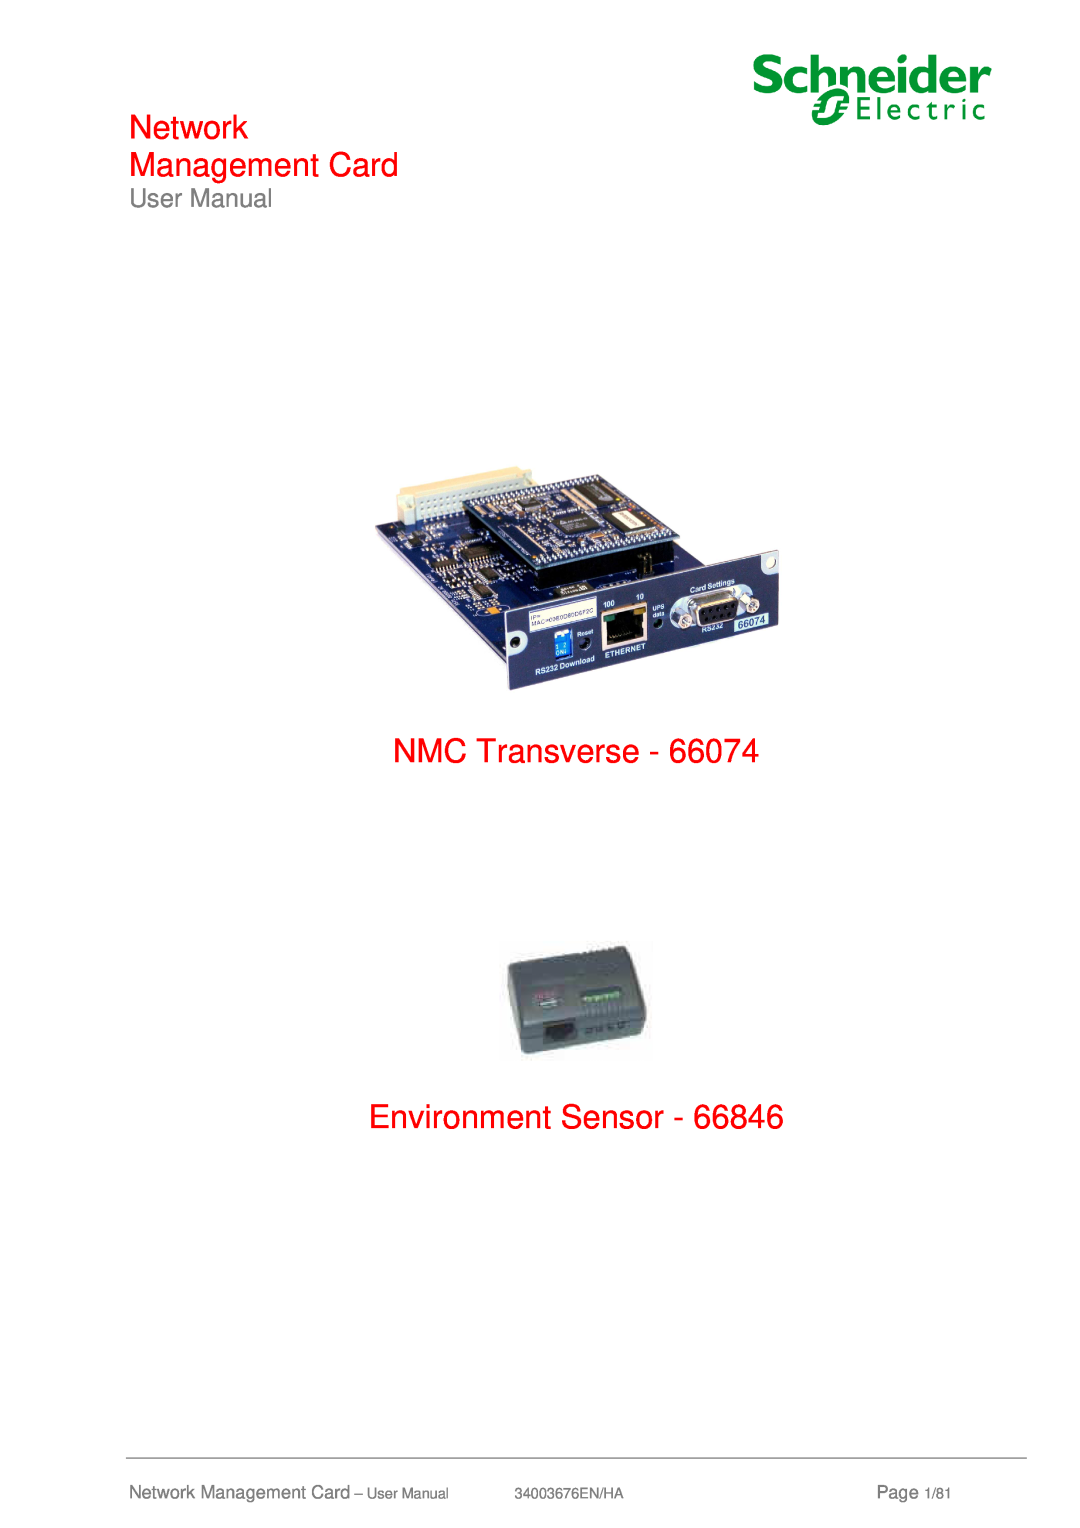 Schneider Electric 66074 user manual Network Management Card, NMC Transverse Environment Sensor, User Manual, Page 1/81 